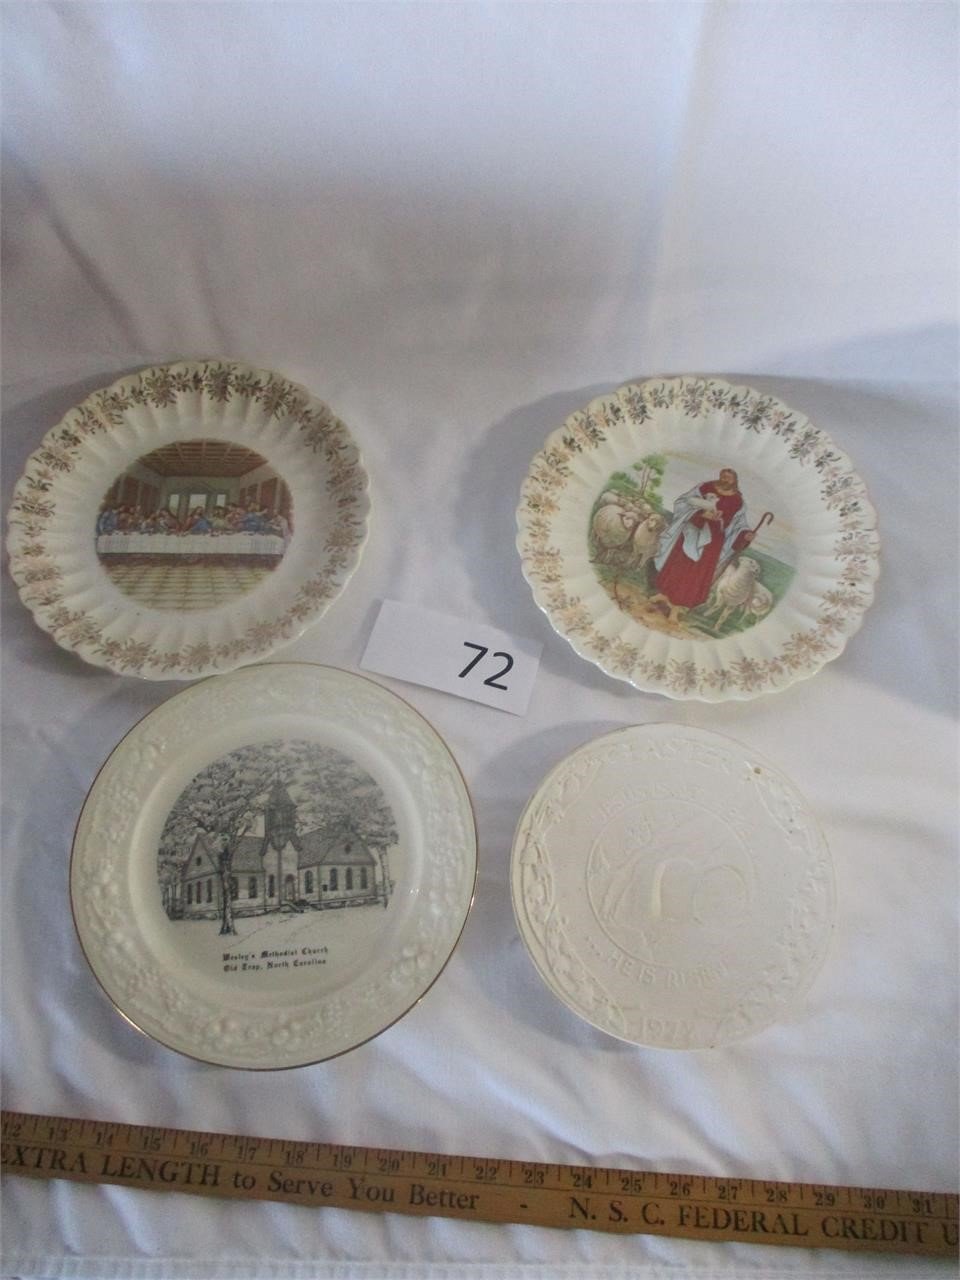 4 Vintage Christmas Plates